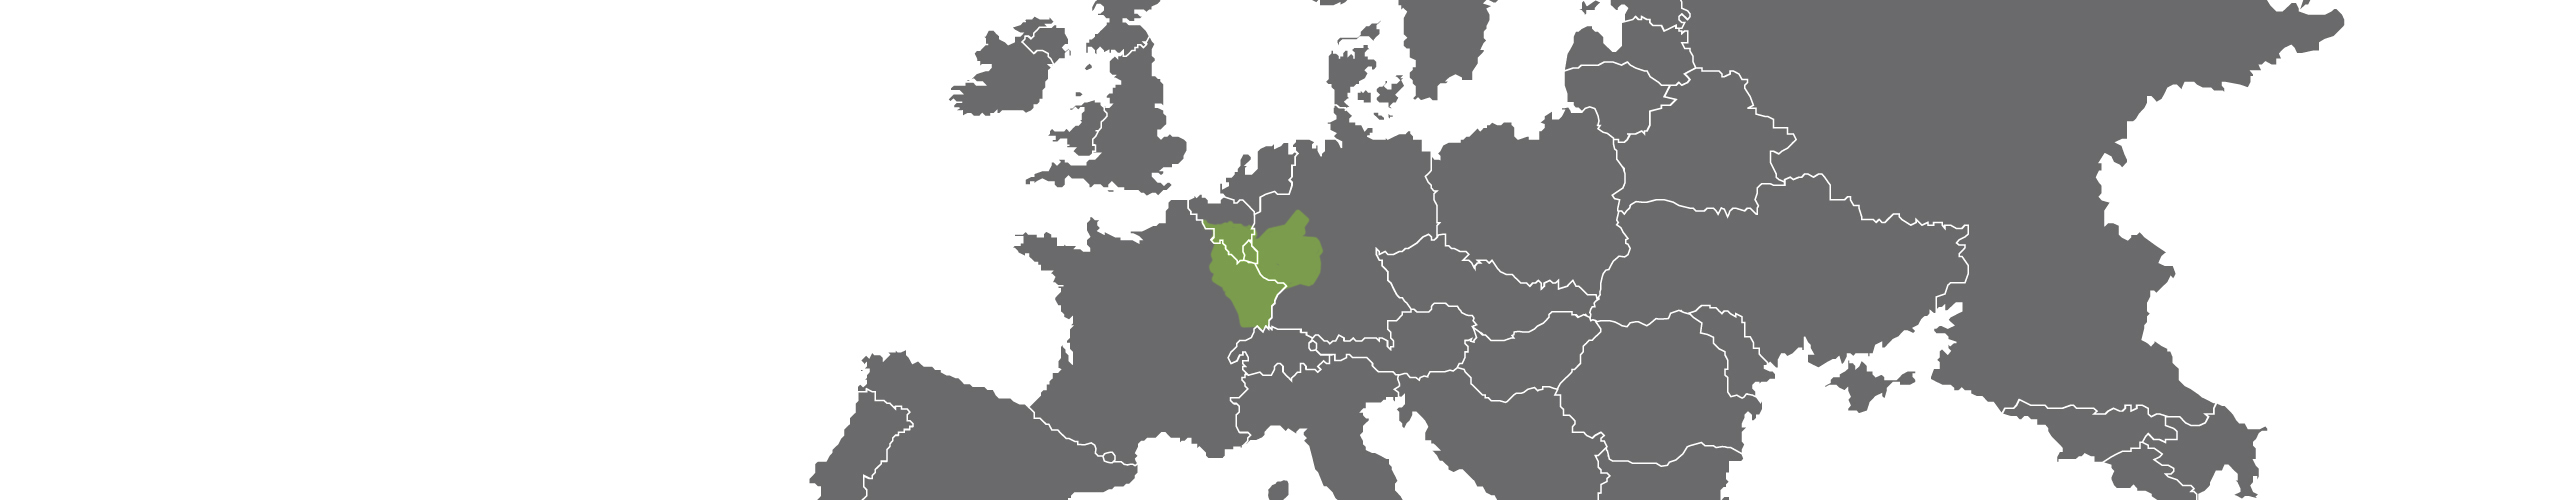 Europe avec zone grande région